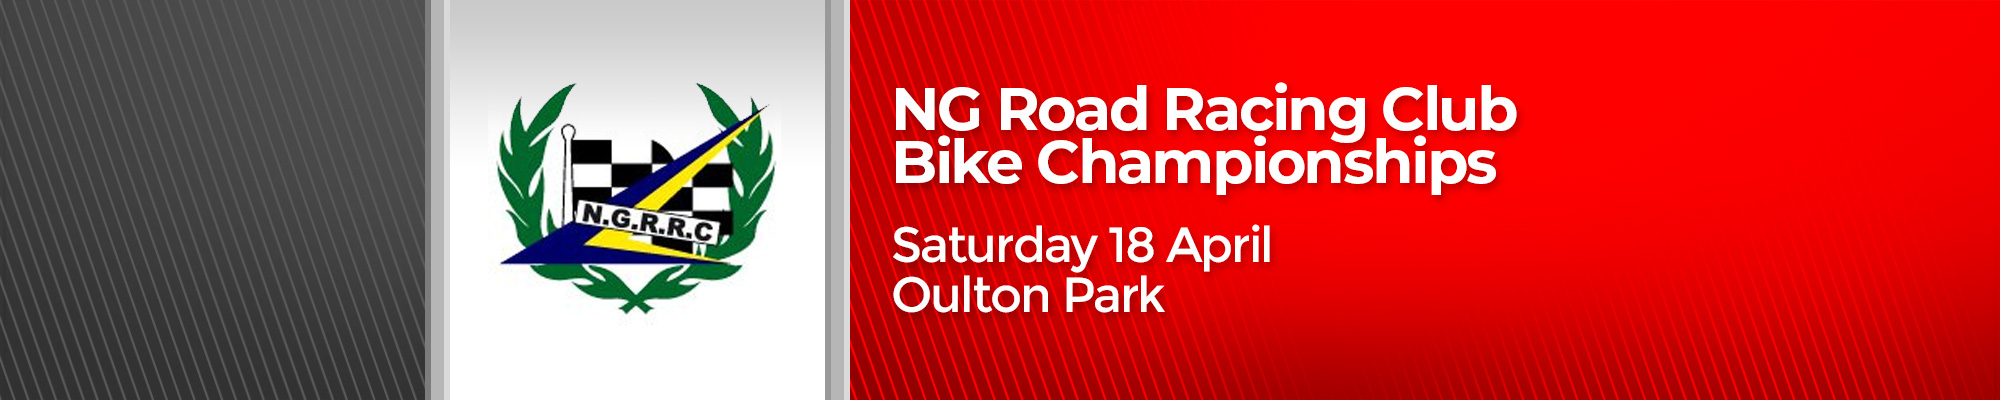  NG Road Racing Club Bike Championships - POSTPONED